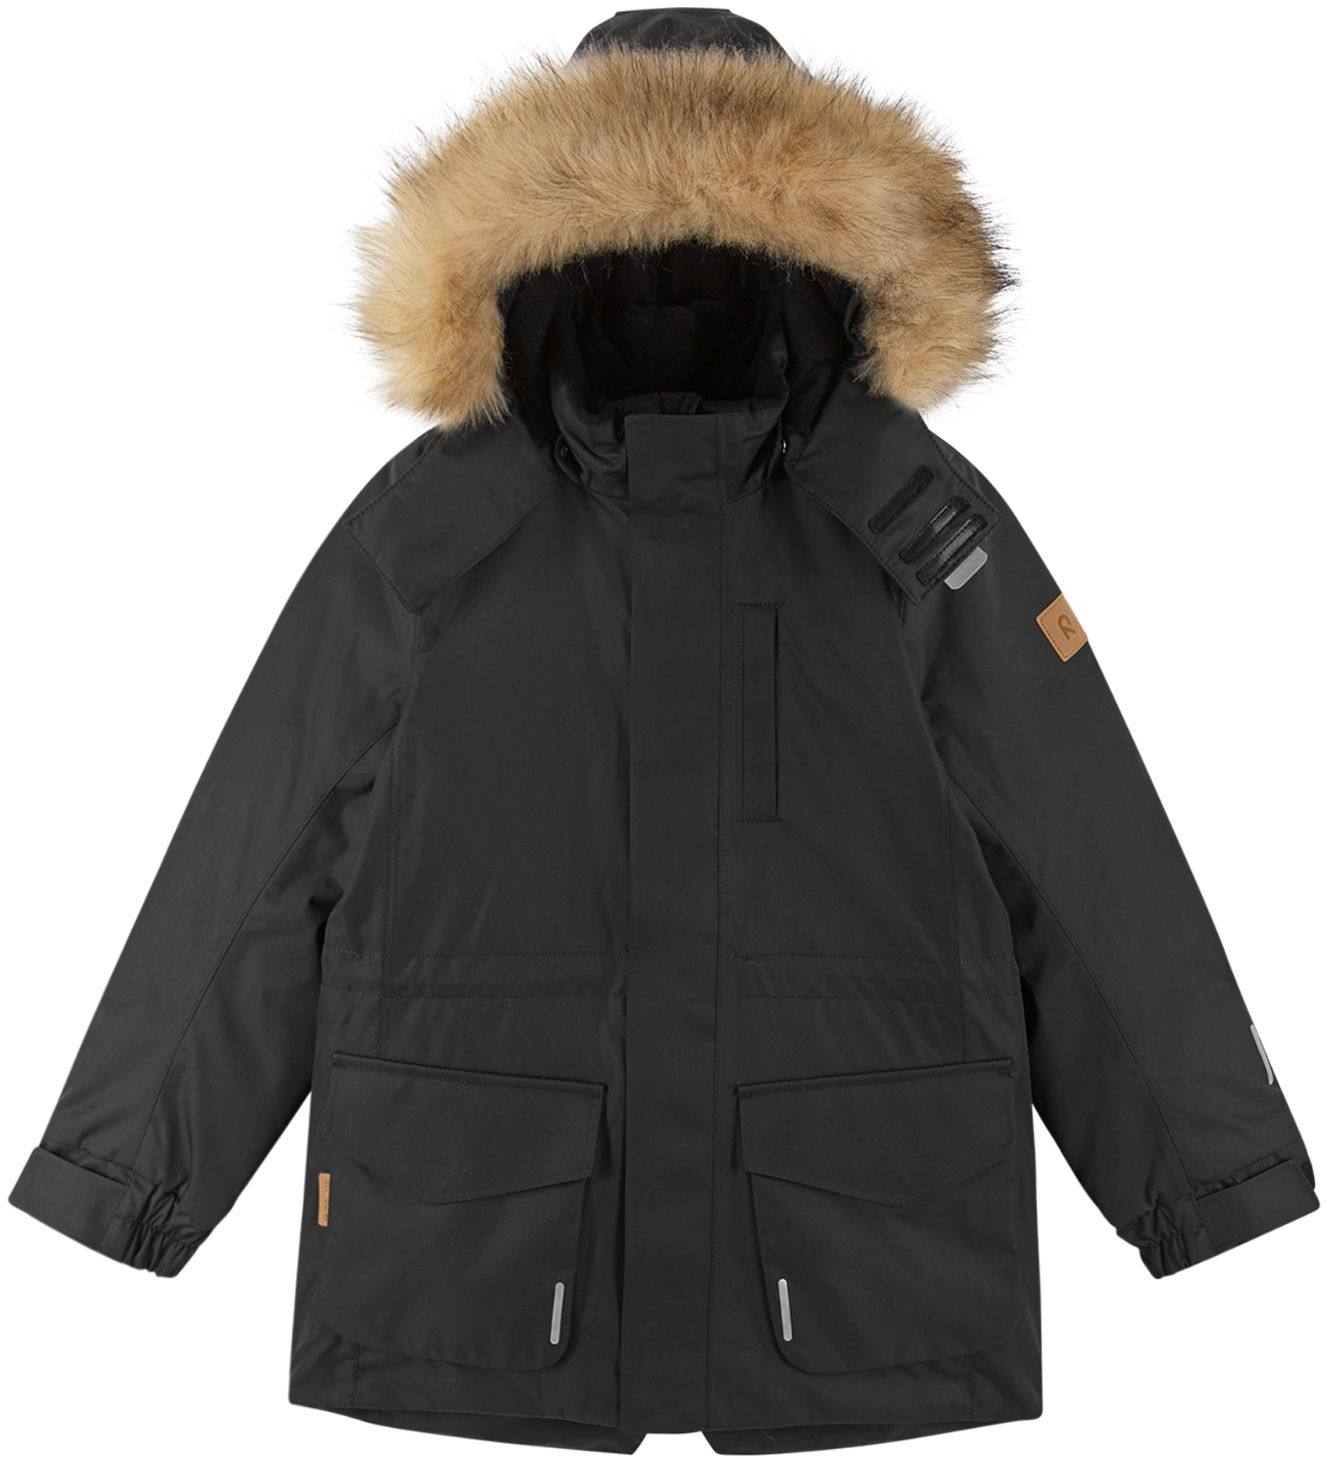 Reima Naapuri Winter Jacket Black 128